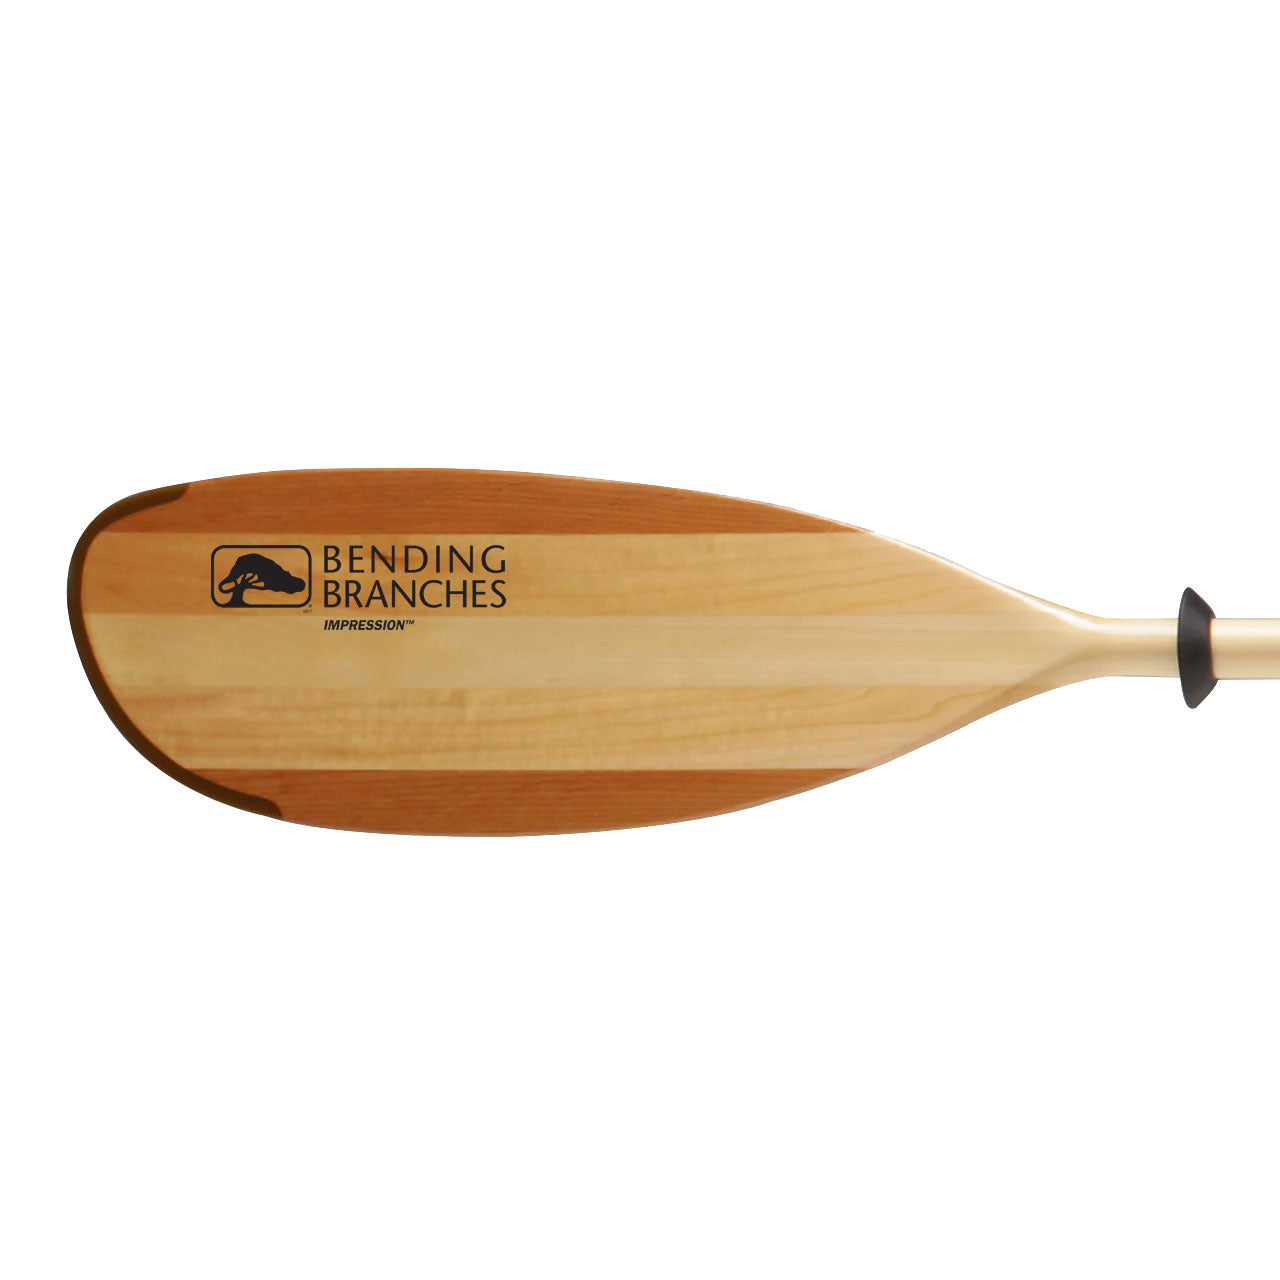 Bending Branches Impression Wood 2-Piece Kayak Paddle blade face